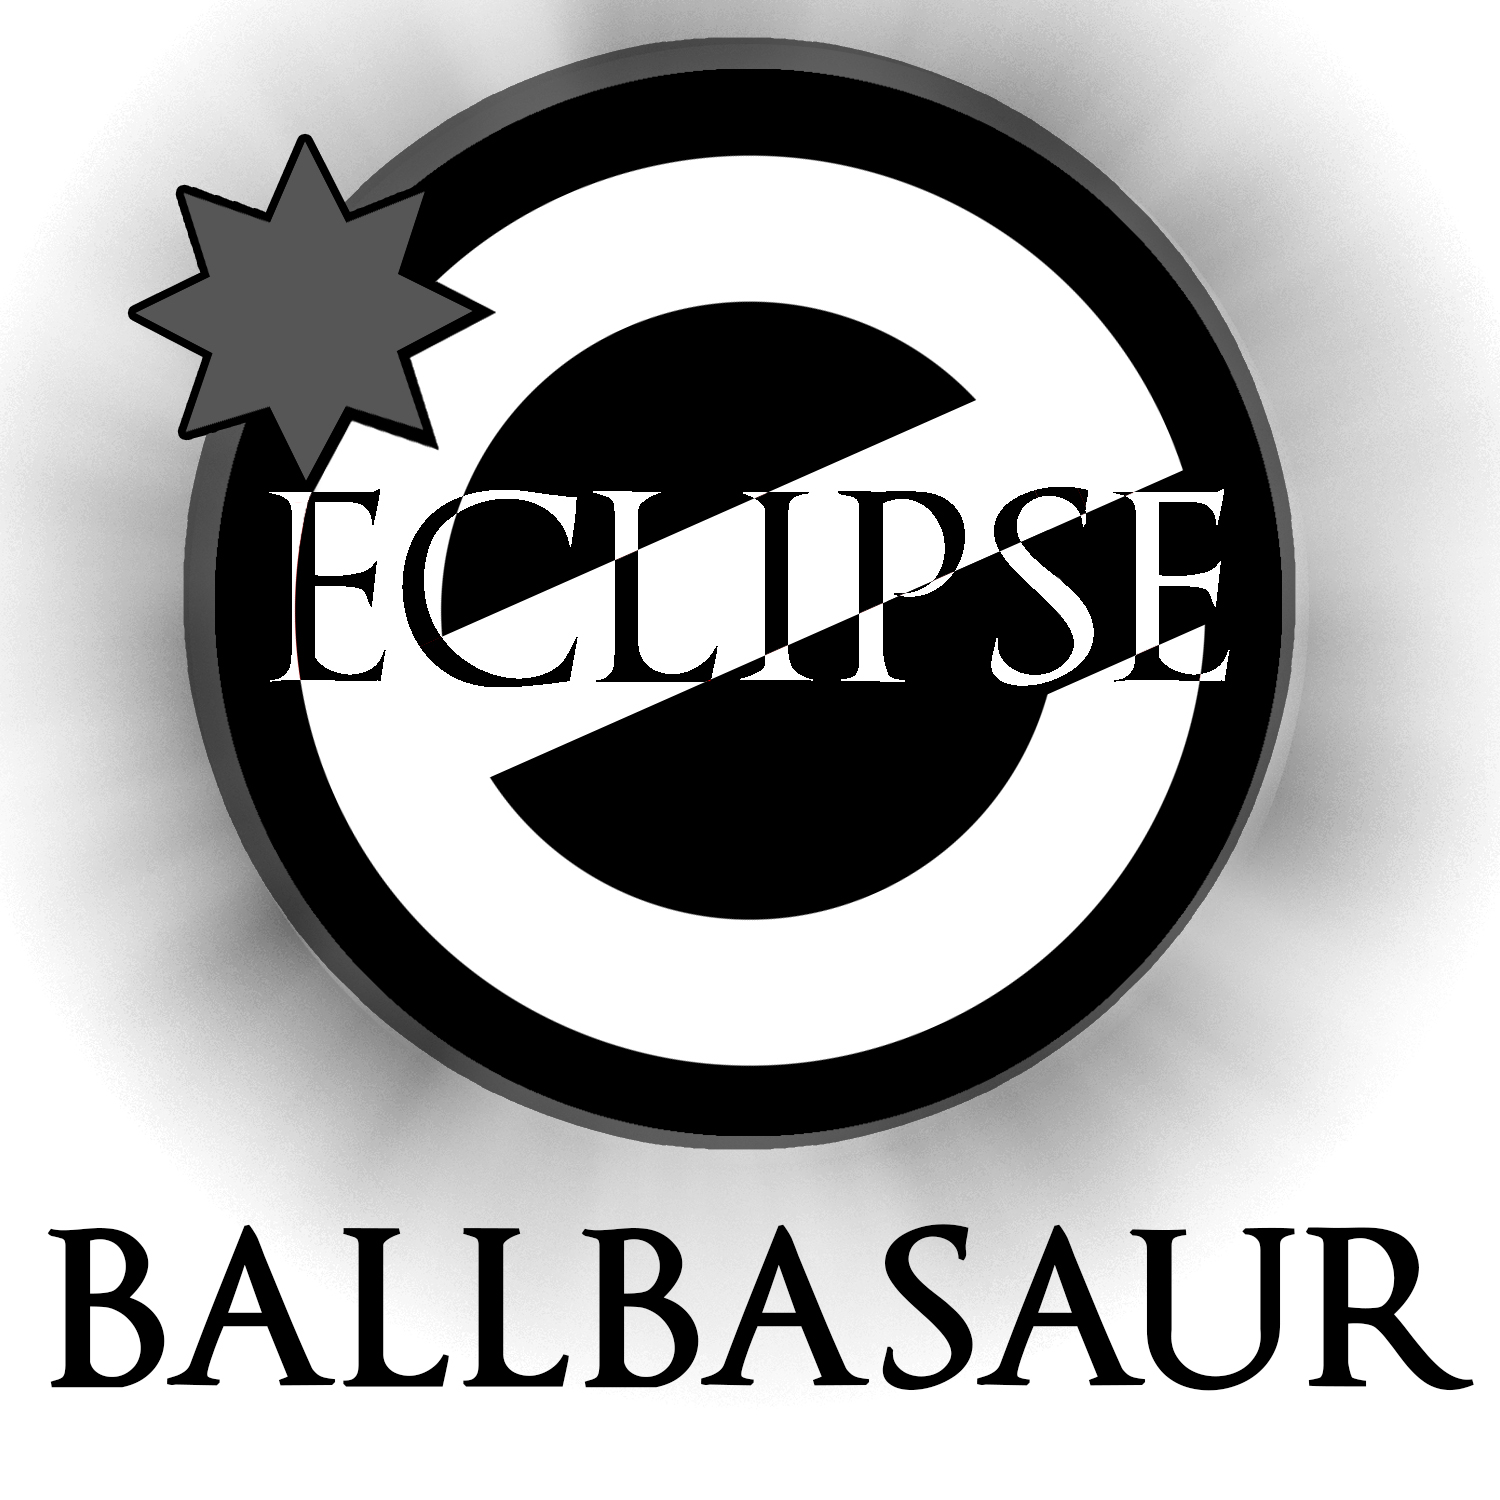 Ballbasaur